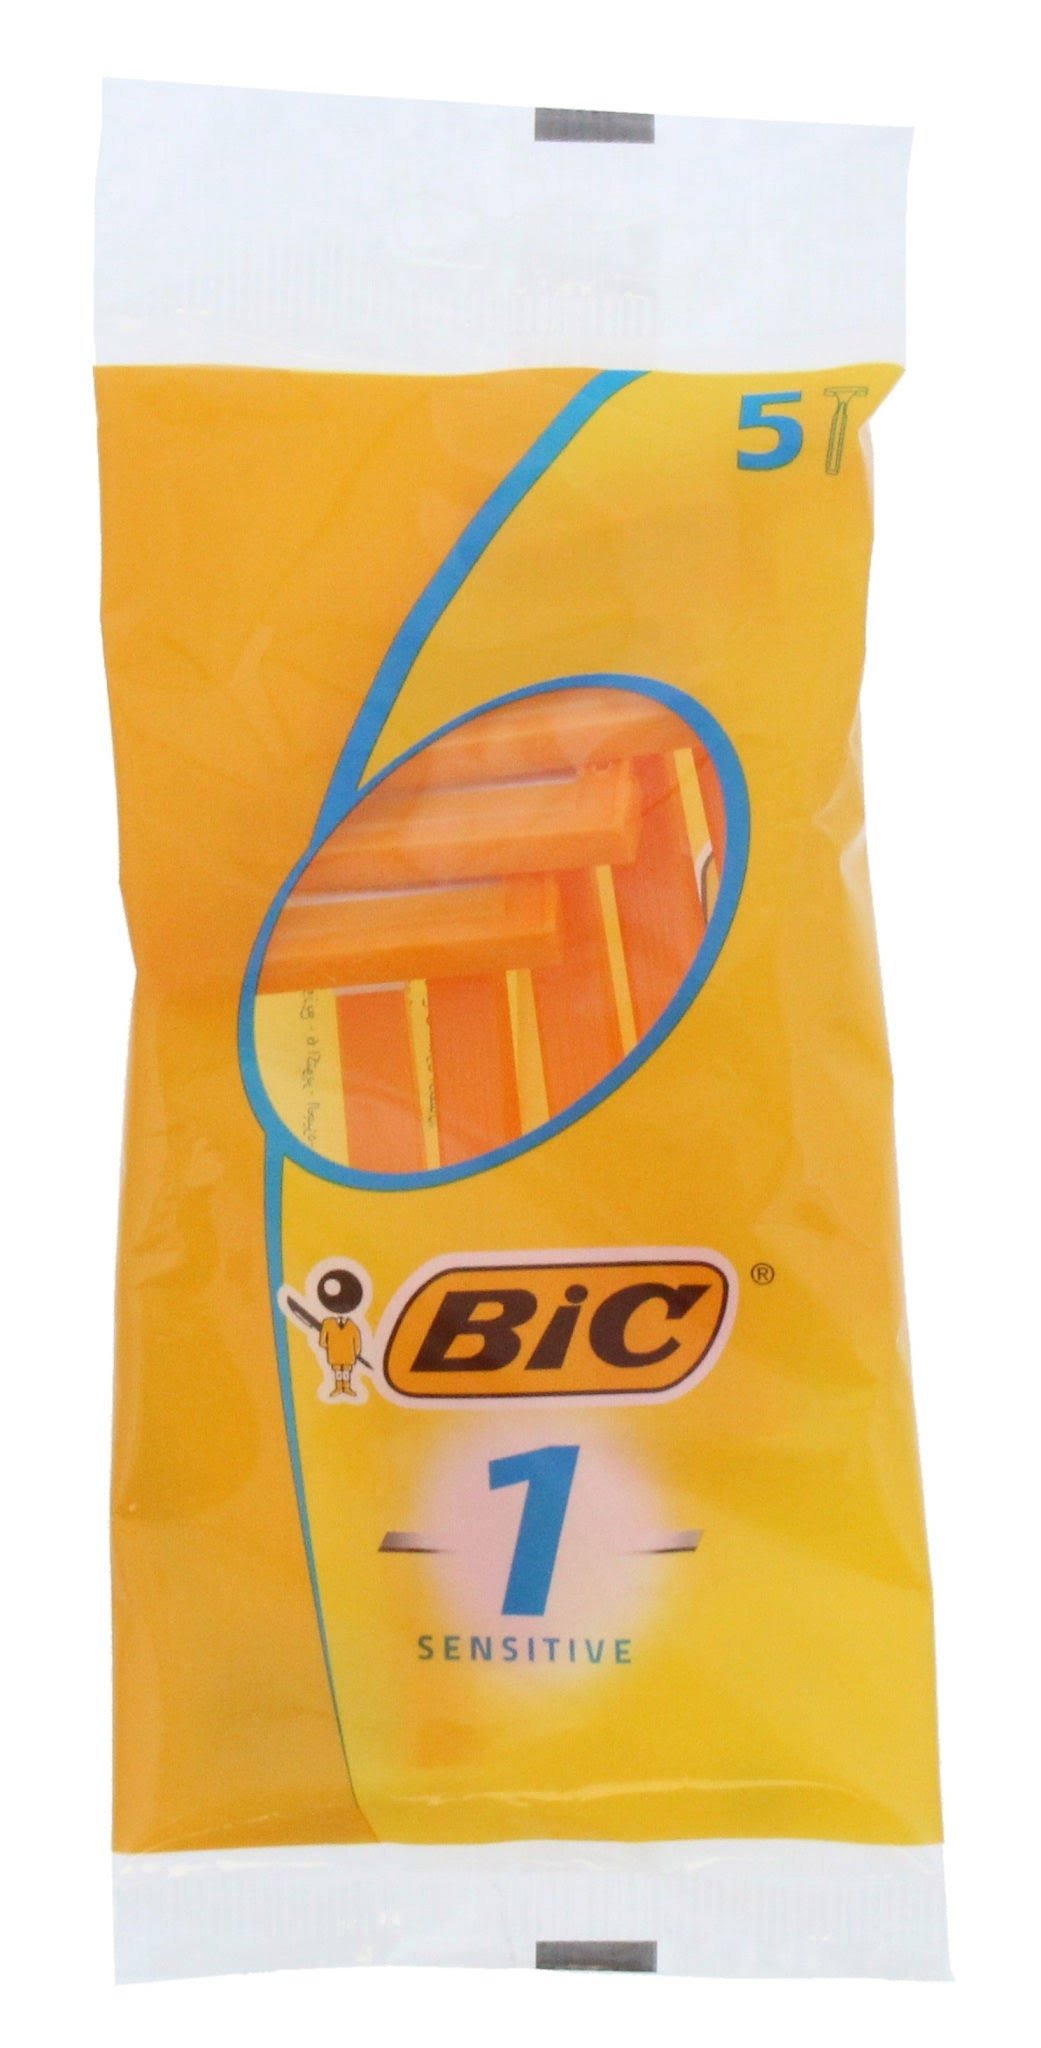 Bic 1 Sensitive Disposable Razors - 5 Pack